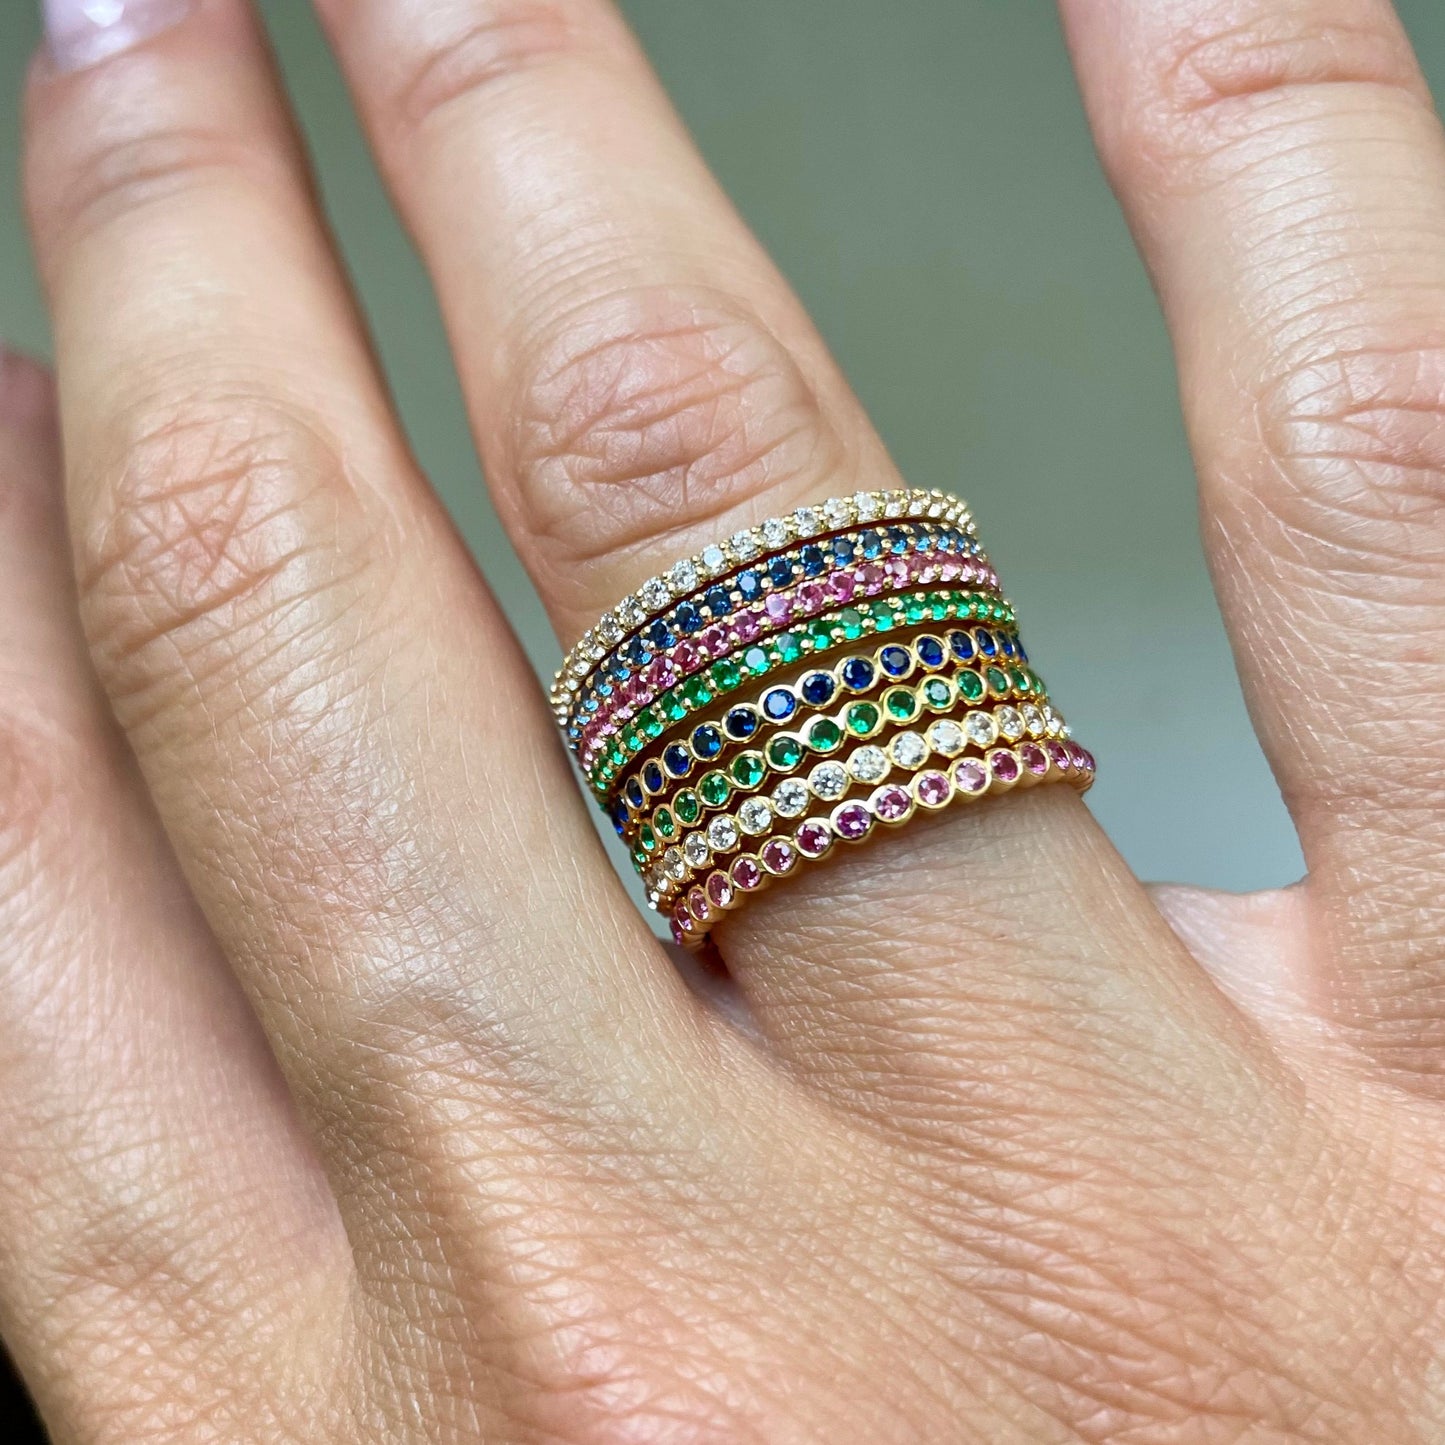 "Eliza" Stackable Pavé Diamond Eternity Ring - - Jewelry - Goldie Paris Jewelry - Ring stackable